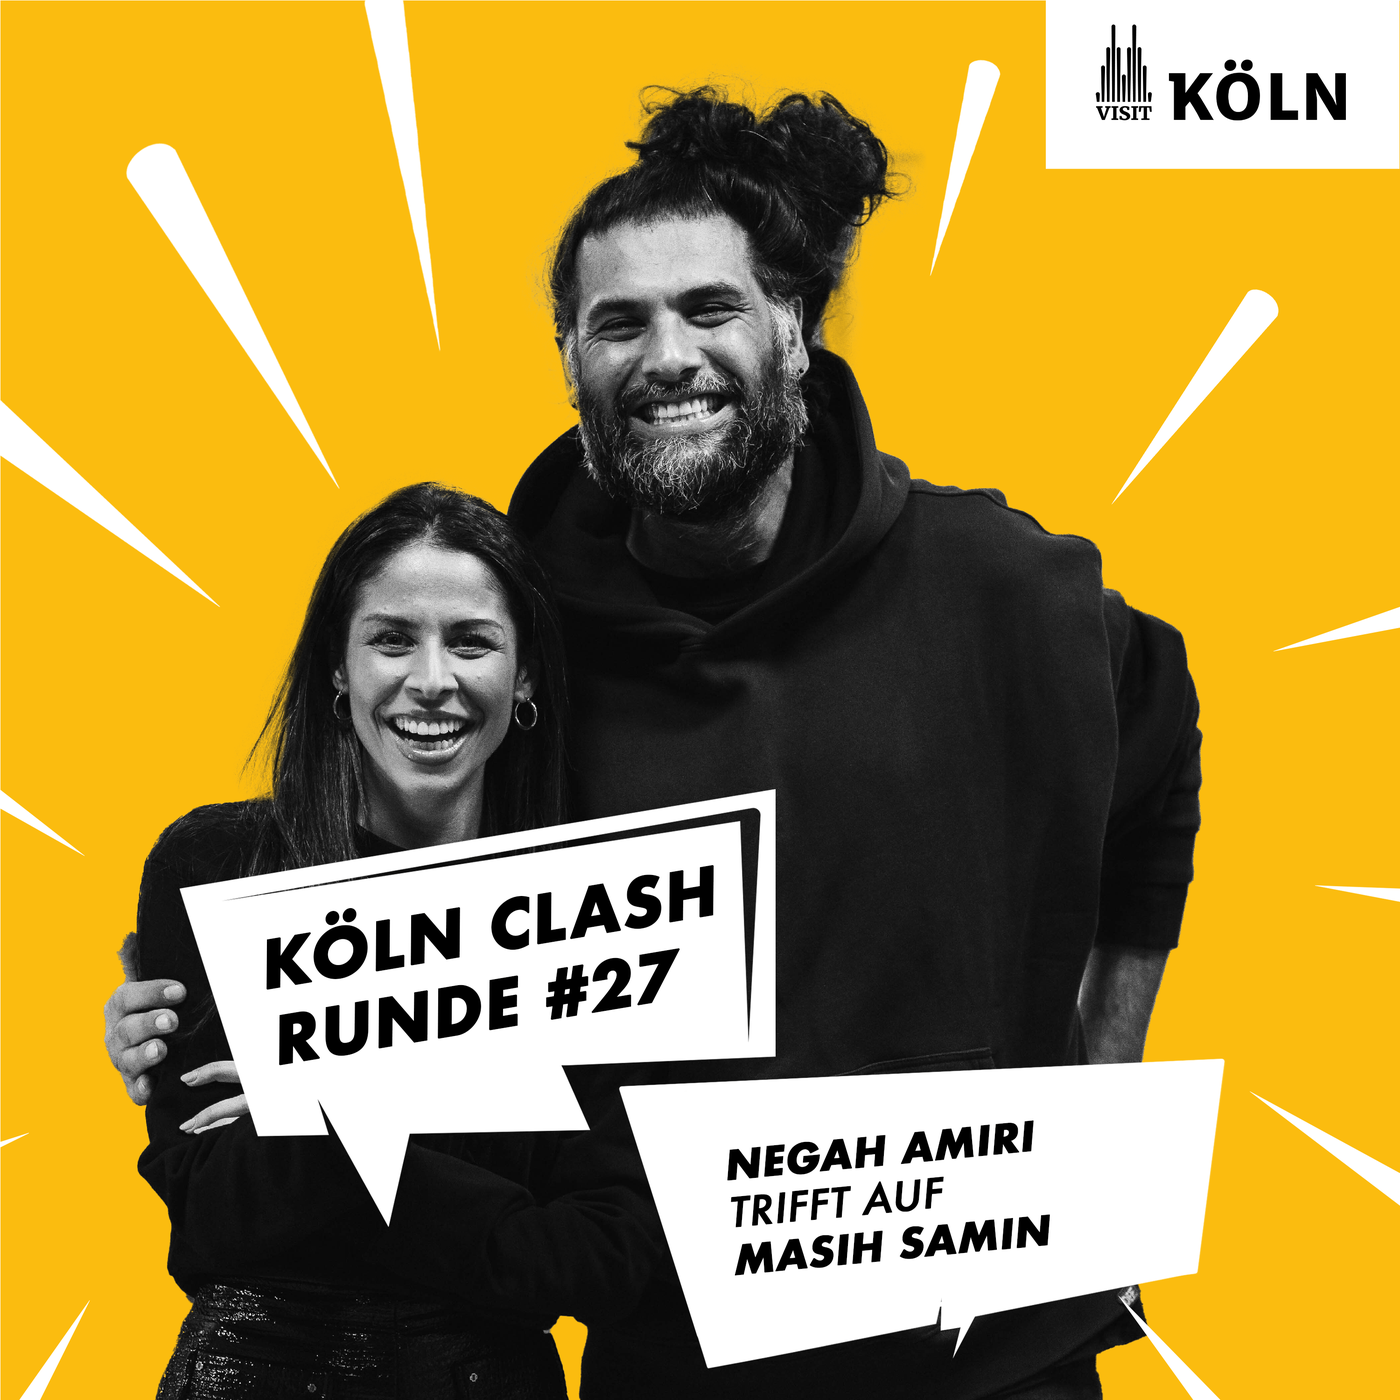 Köln Clash, Runde #27 - Negah Amiri trifft auf Masih Samin